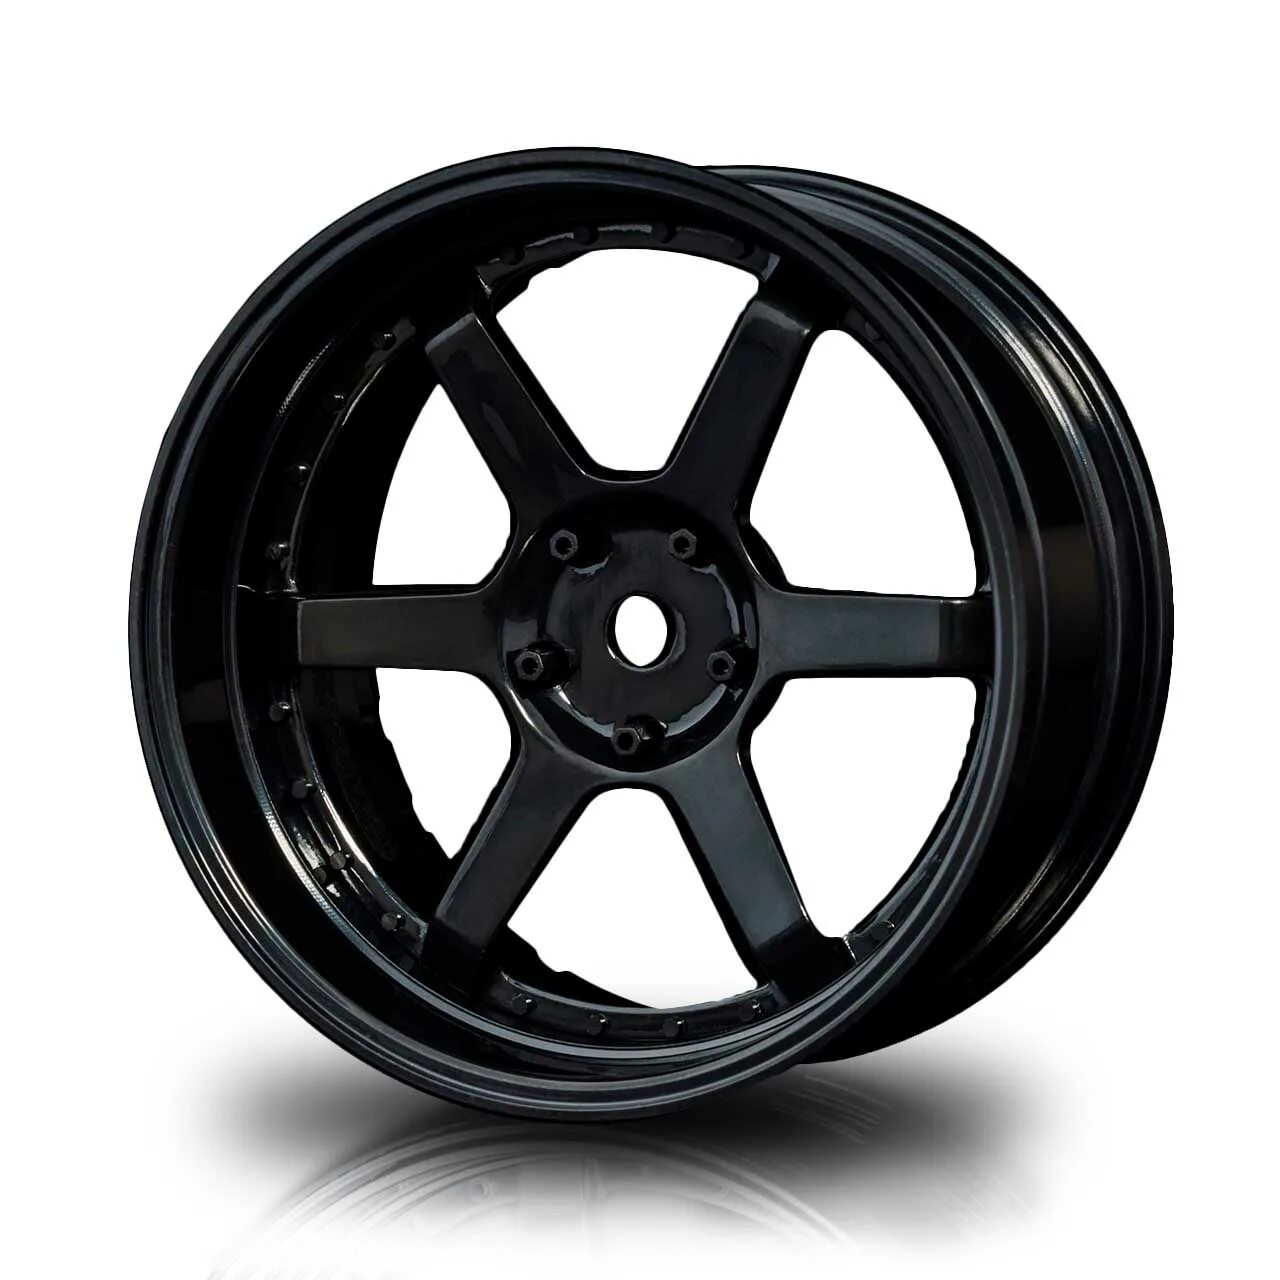 RC Drift диски MST. MST диски Flat Black fb. Диски MST Racing. MST SBK-FS LM Offset Changeable Wheel Set (4). Drift wheels